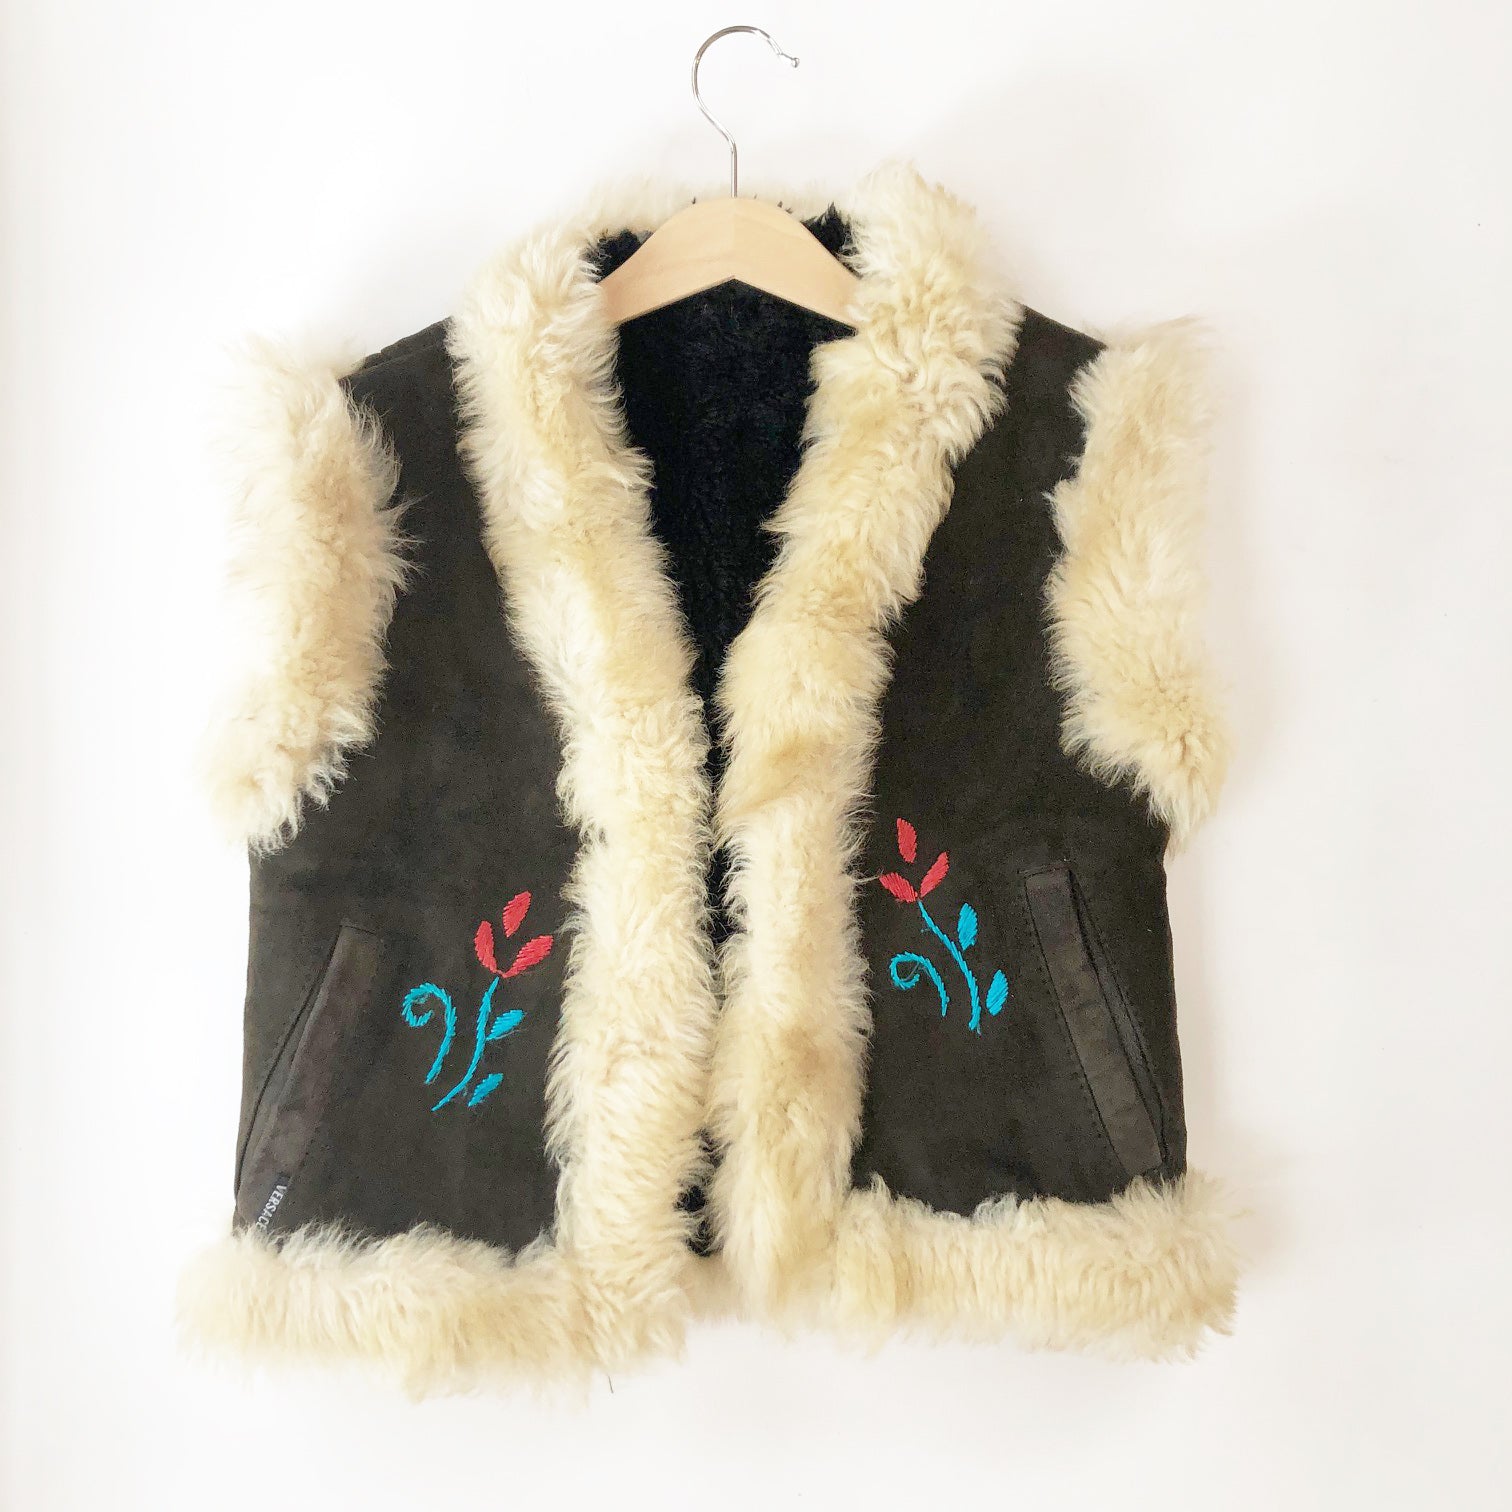 Stunning Vintage Versace Suede Embroidered Vest size 10-12